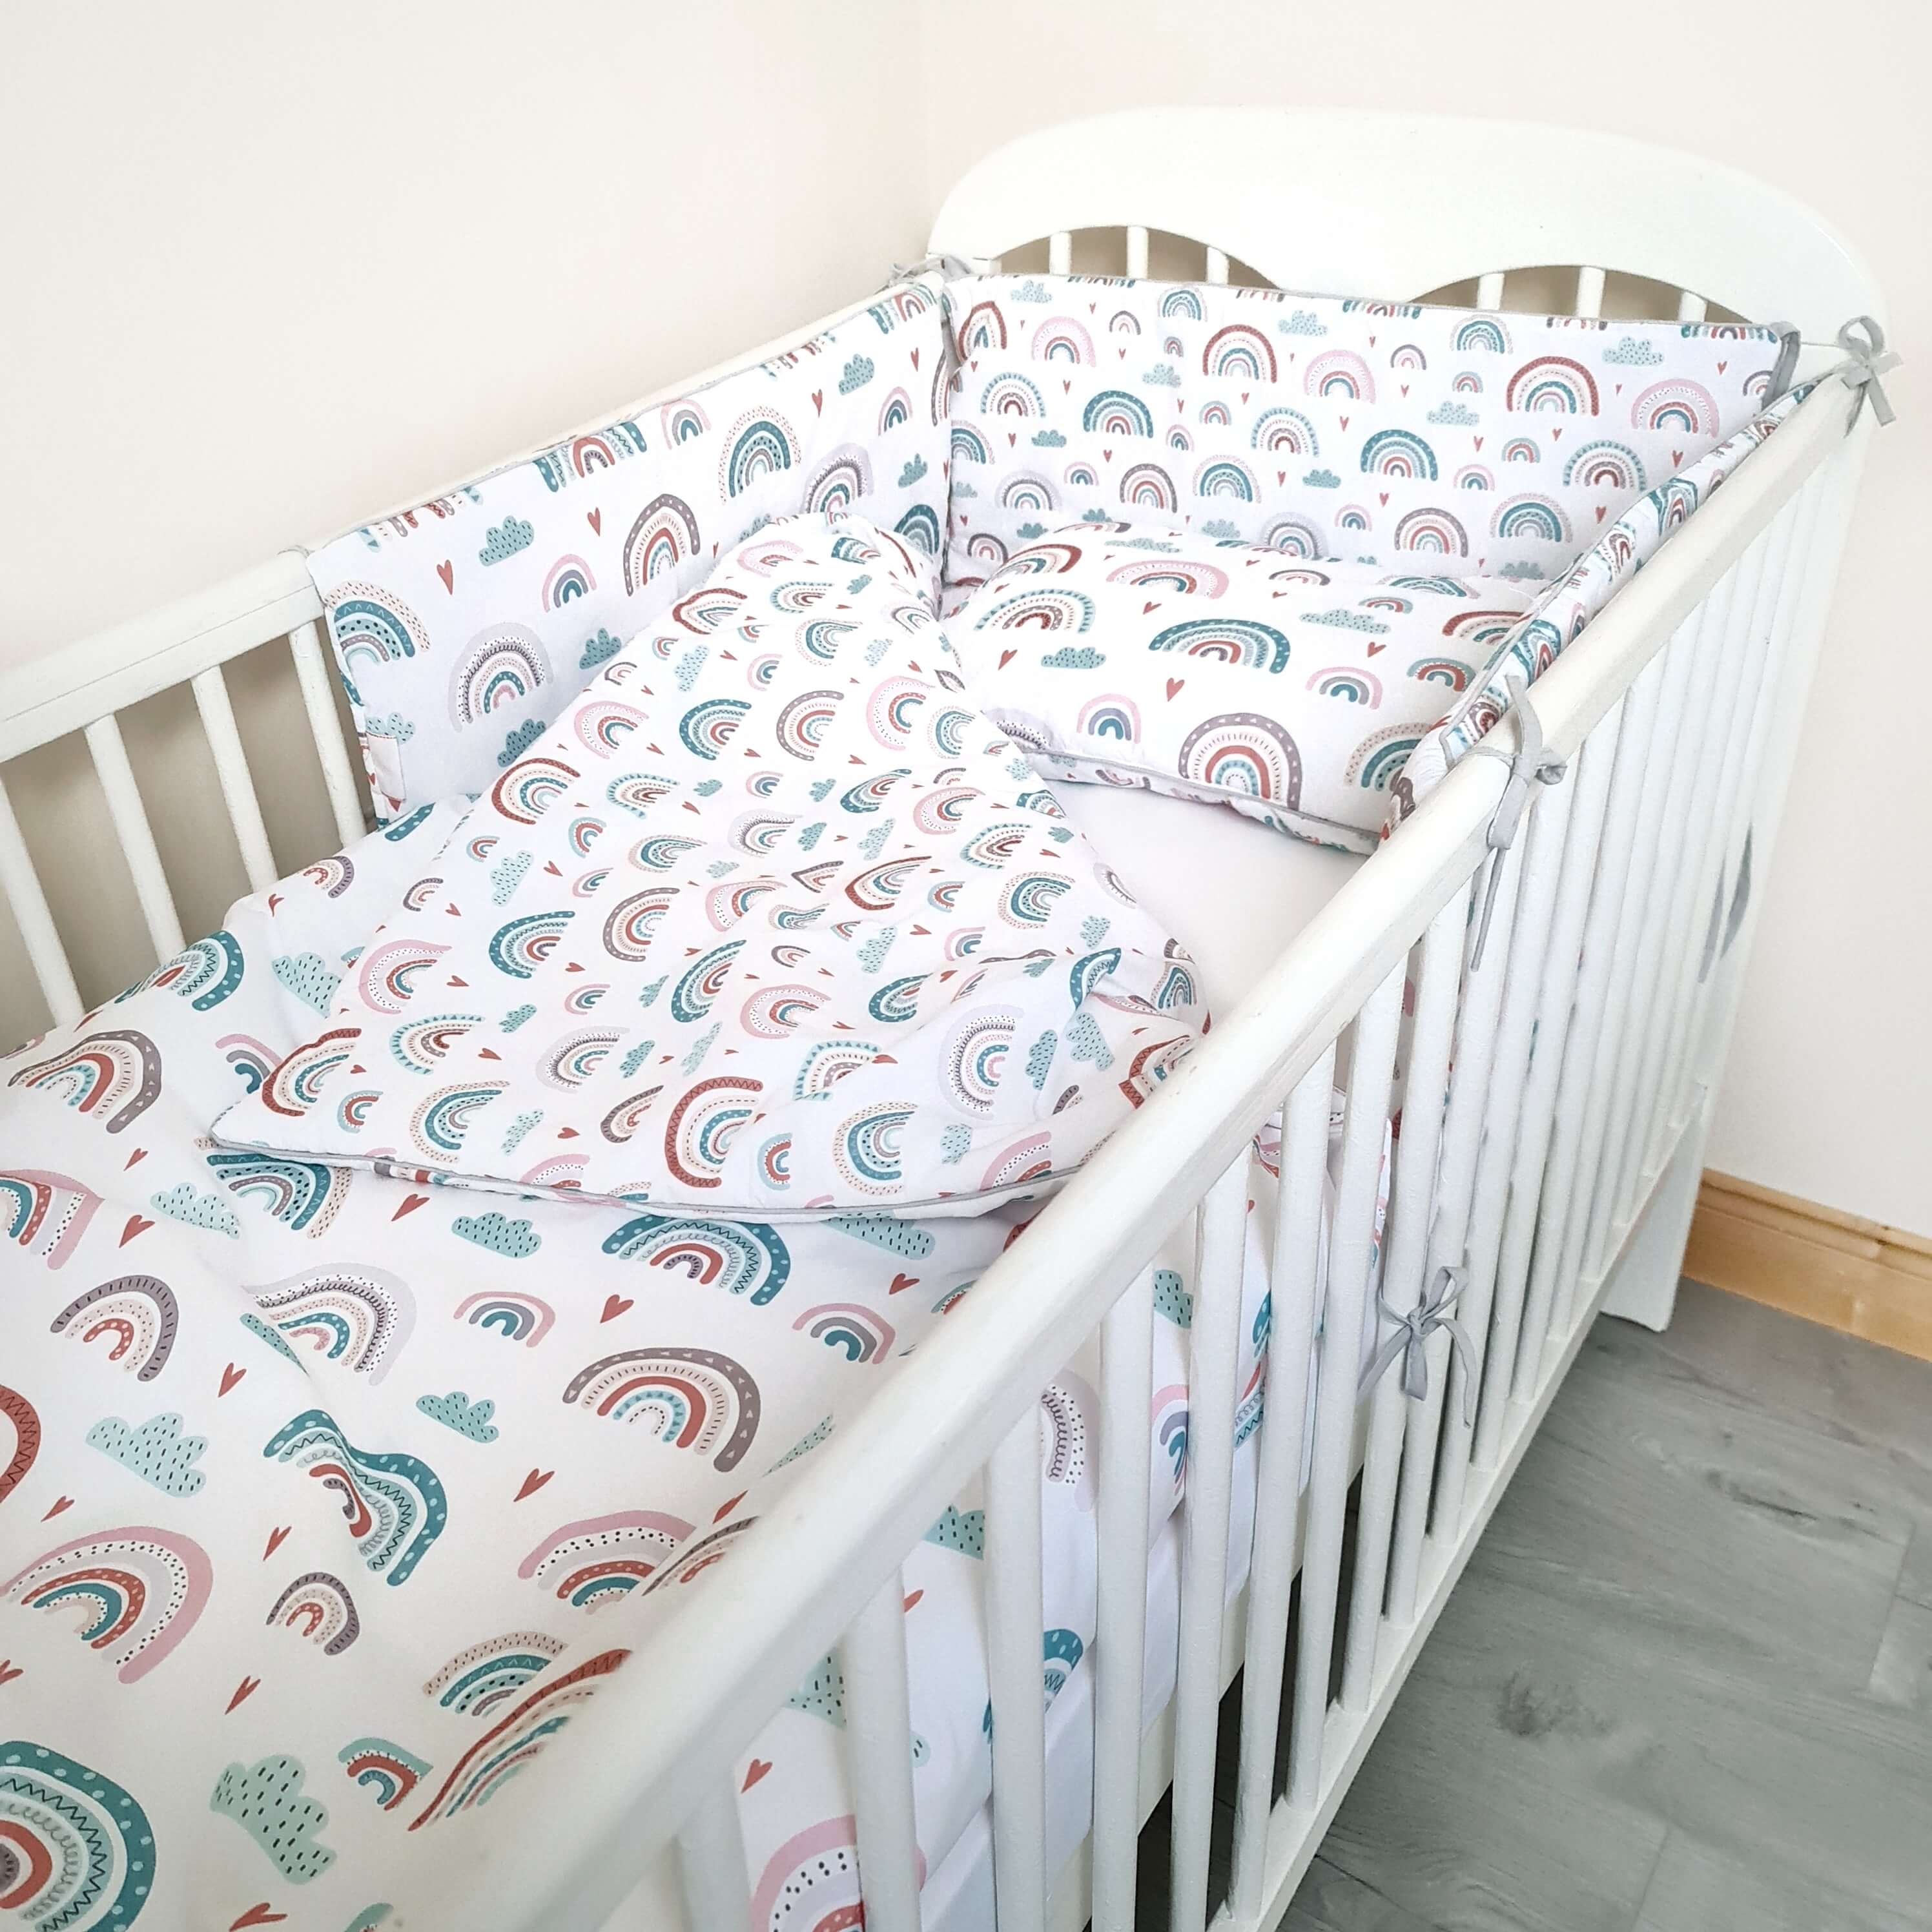 Toddler cot bed kit- 3 pc’s set- duvet & pillow plus cot bed bumper- Colours of the rainbow Rainbows print + smaller rainbows print on reverse